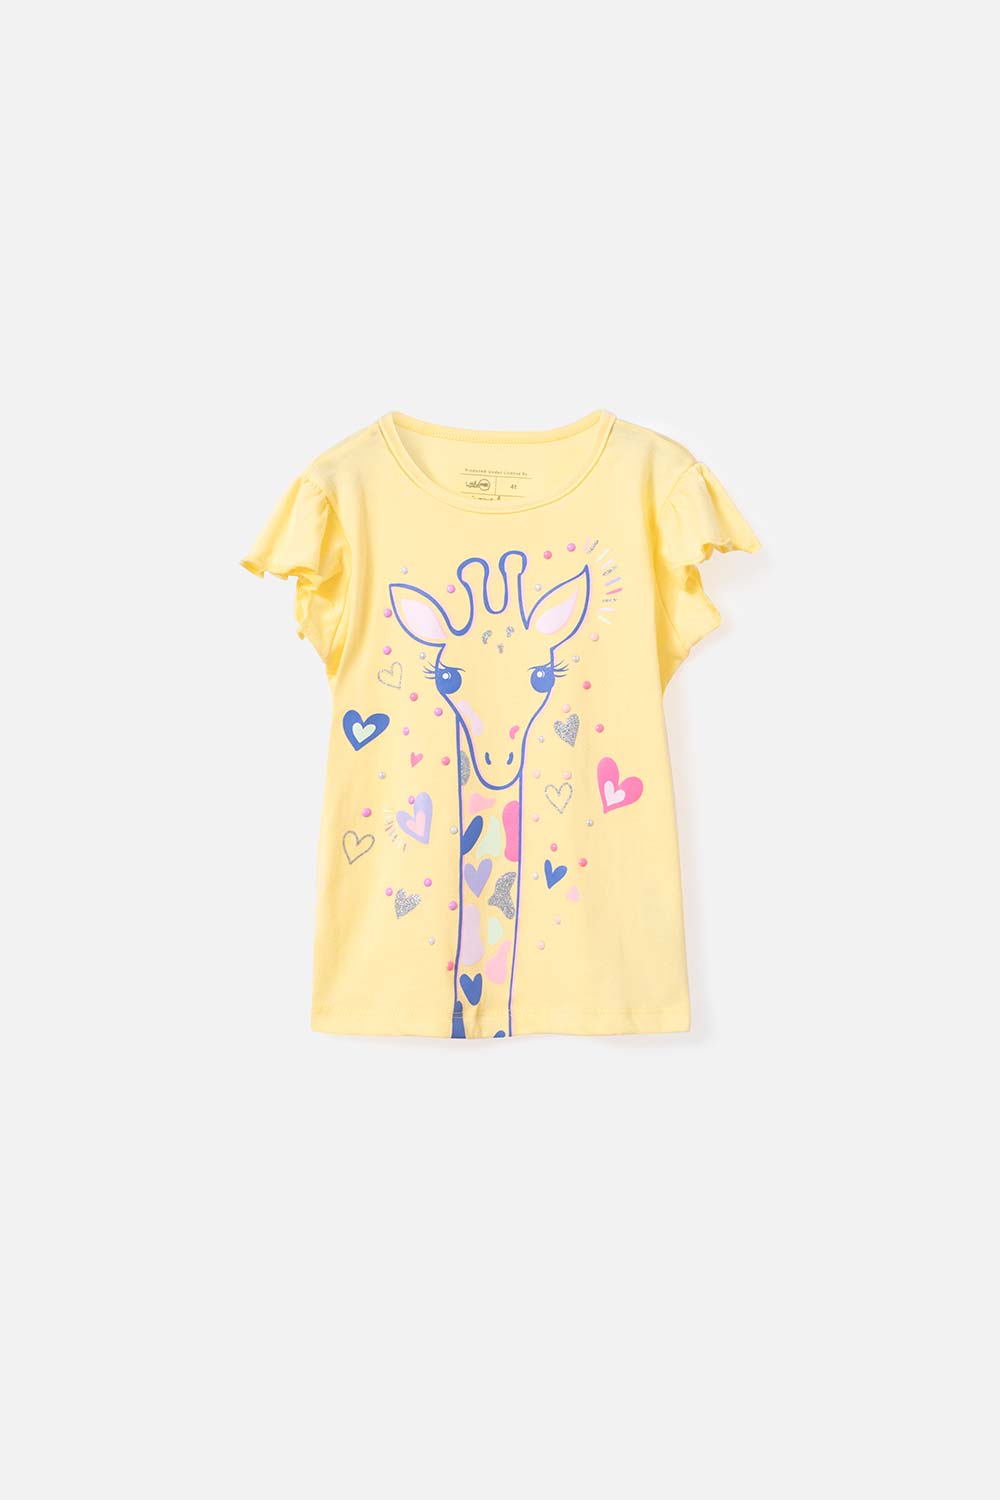 Camiseta LittleMic manga corta amarilla para niña 2T a 5T - Tienda Online  MIC